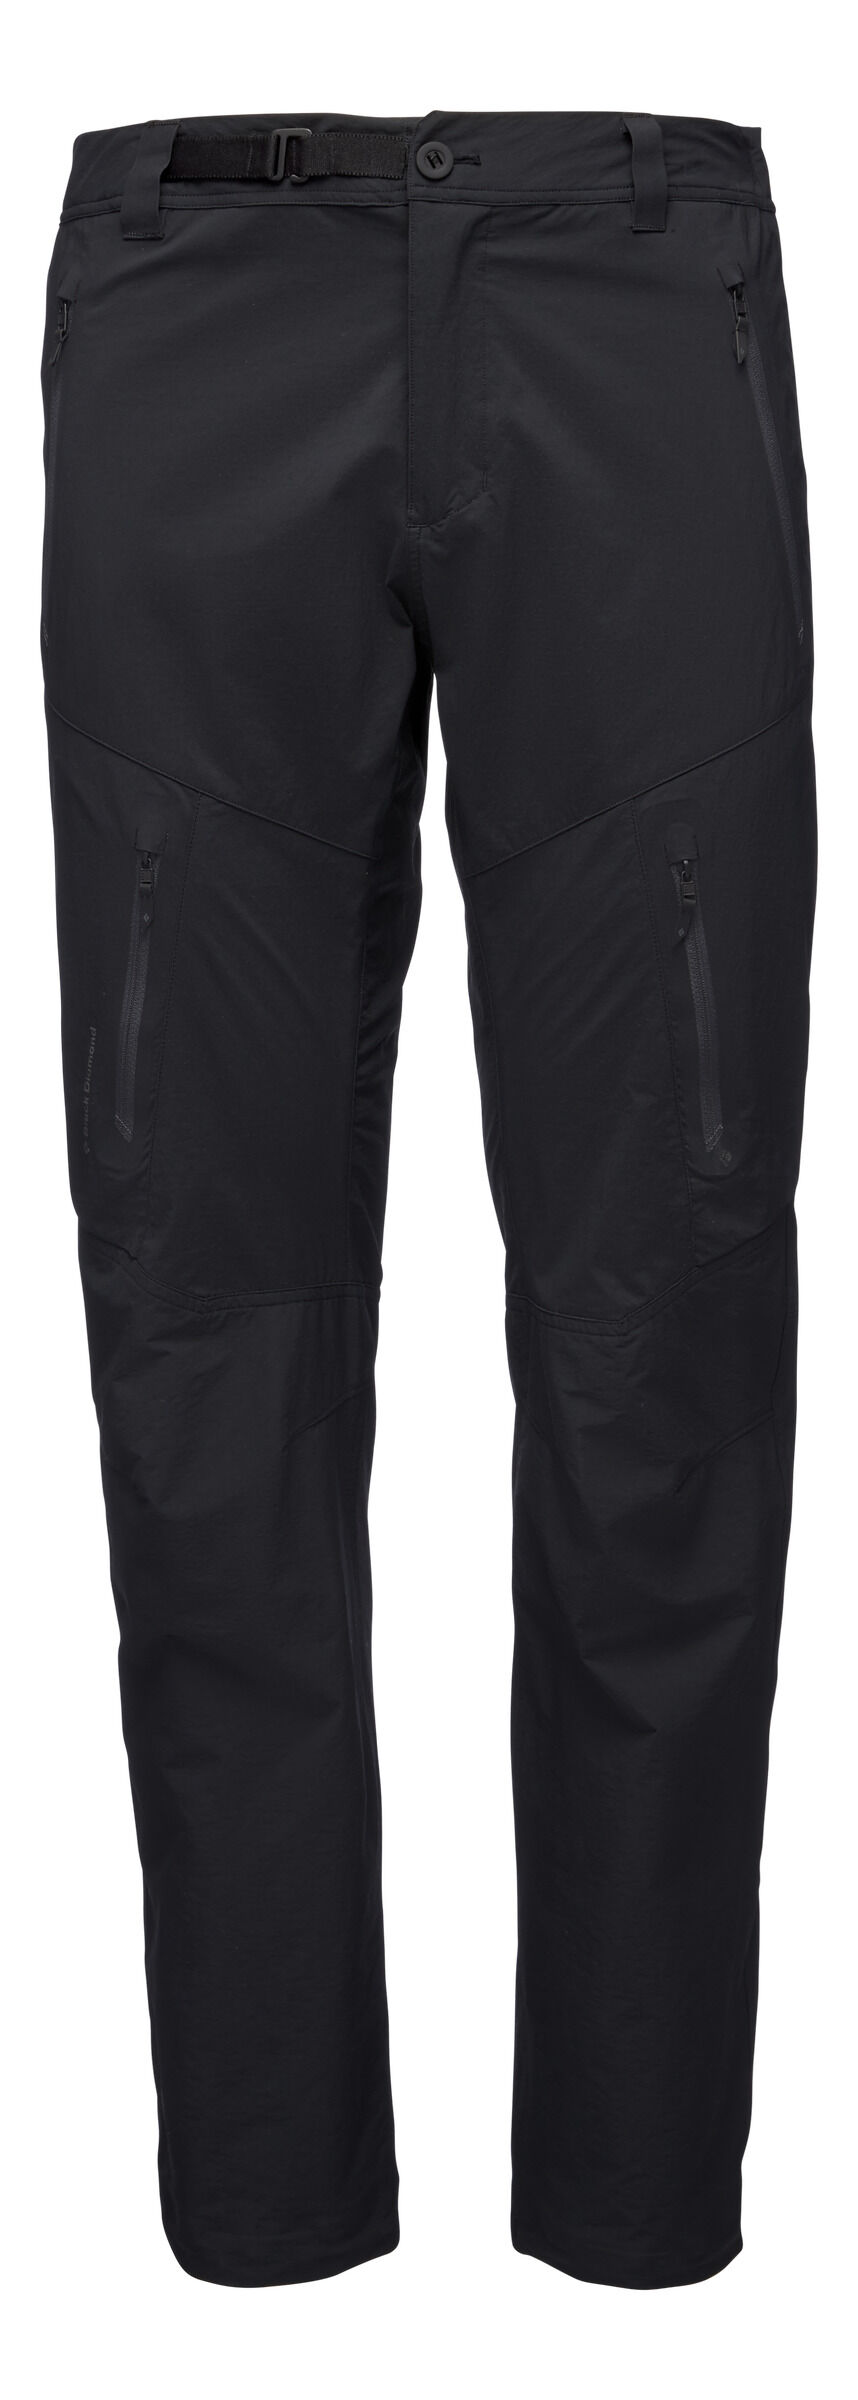 Black Diamond - Traverse Pants - Trekking trousers - Men's